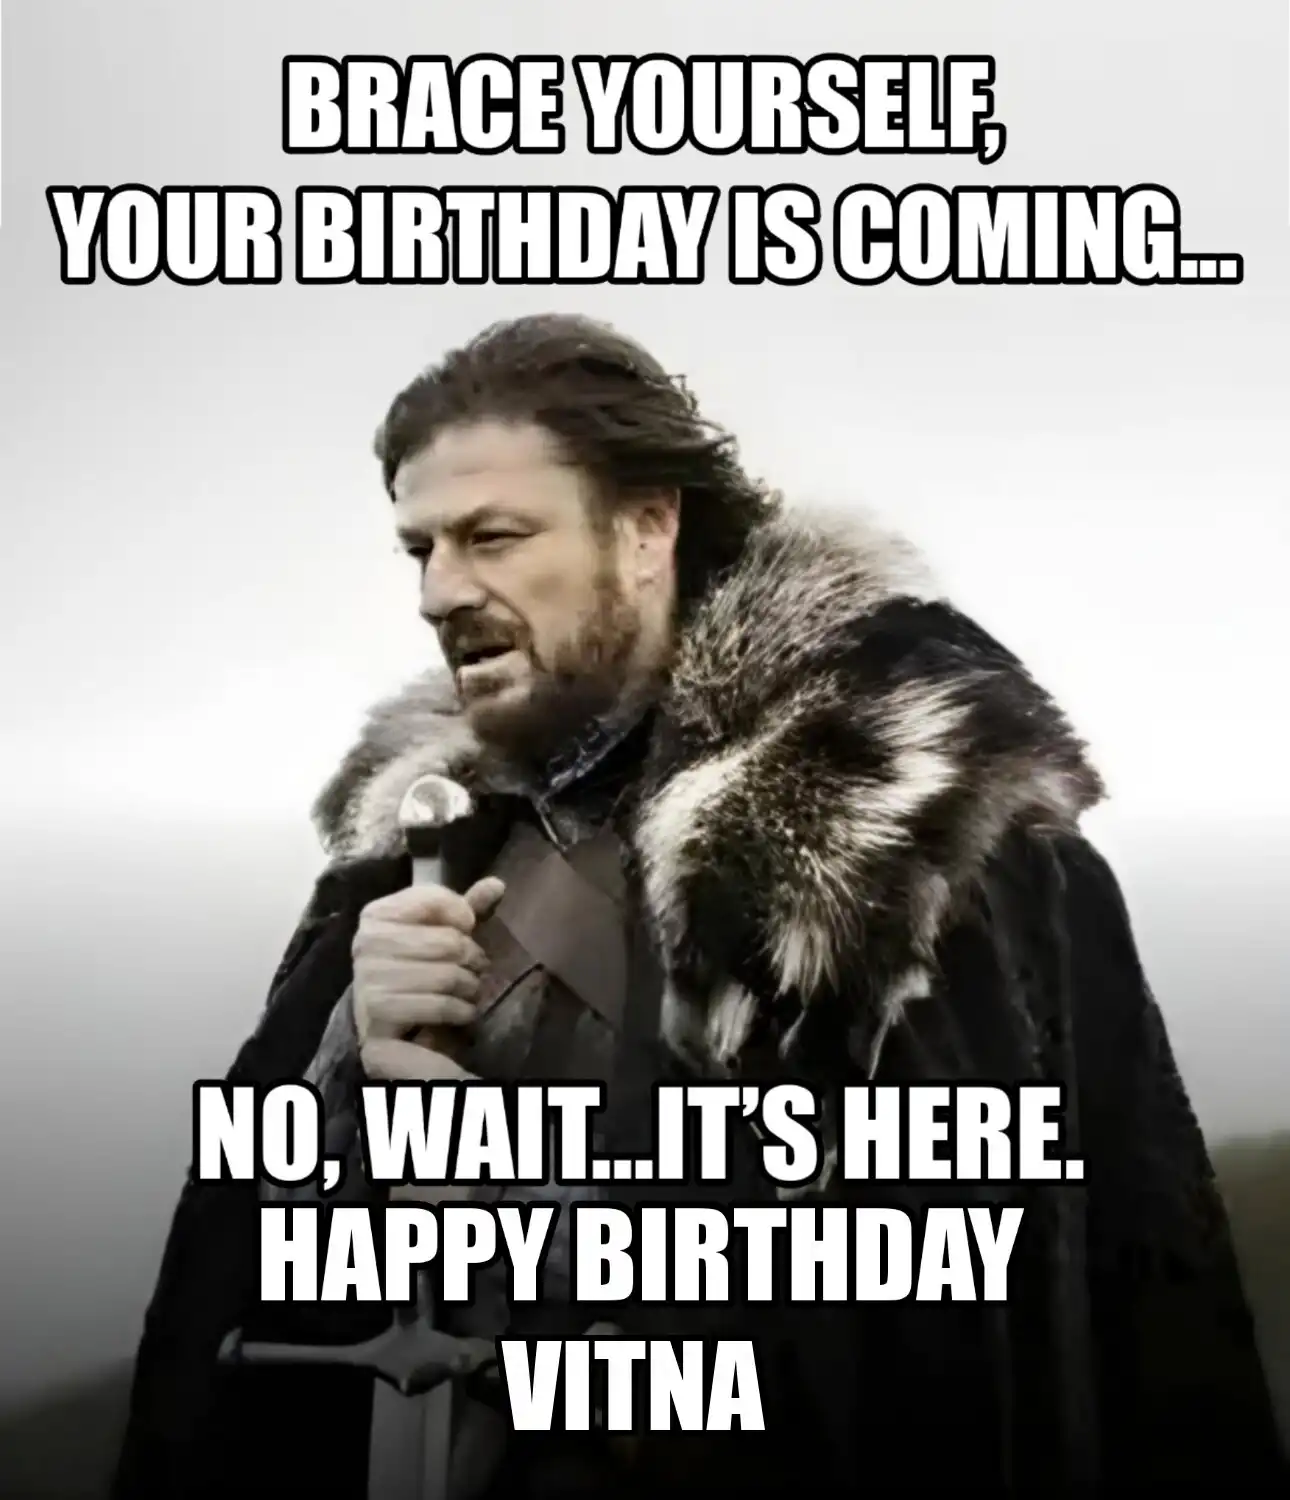 Happy Birthday Vitna Brace Yourself Your Birthday Is Coming Meme